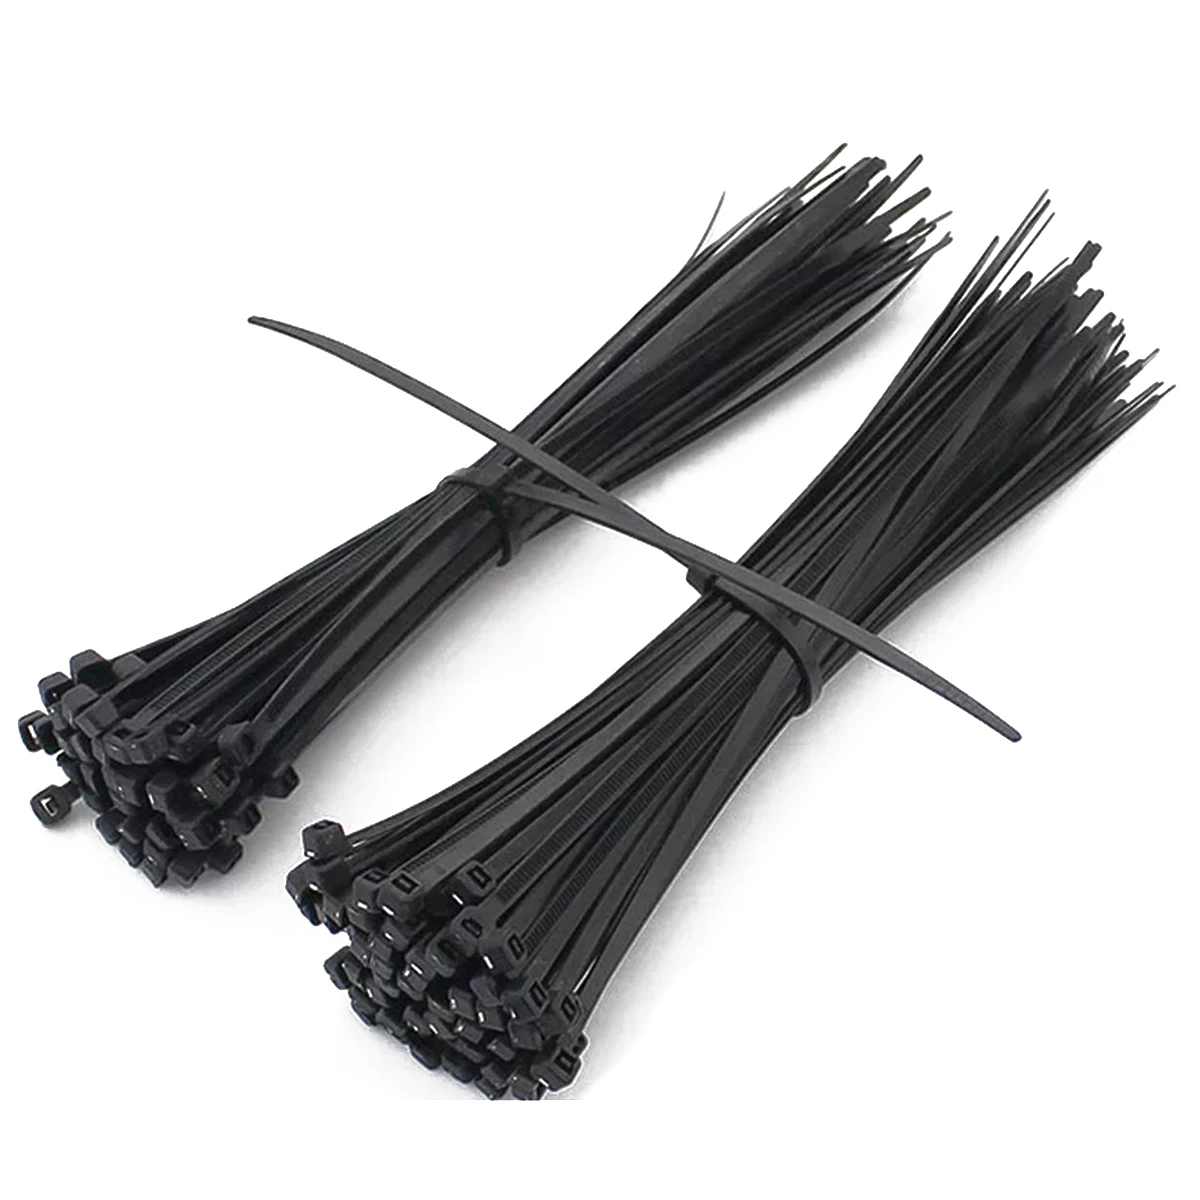 Shatchi Strong Nylon Plastic Cable Ties Zip Tie Wraps 300mm x 4,8mm Black Bulk 